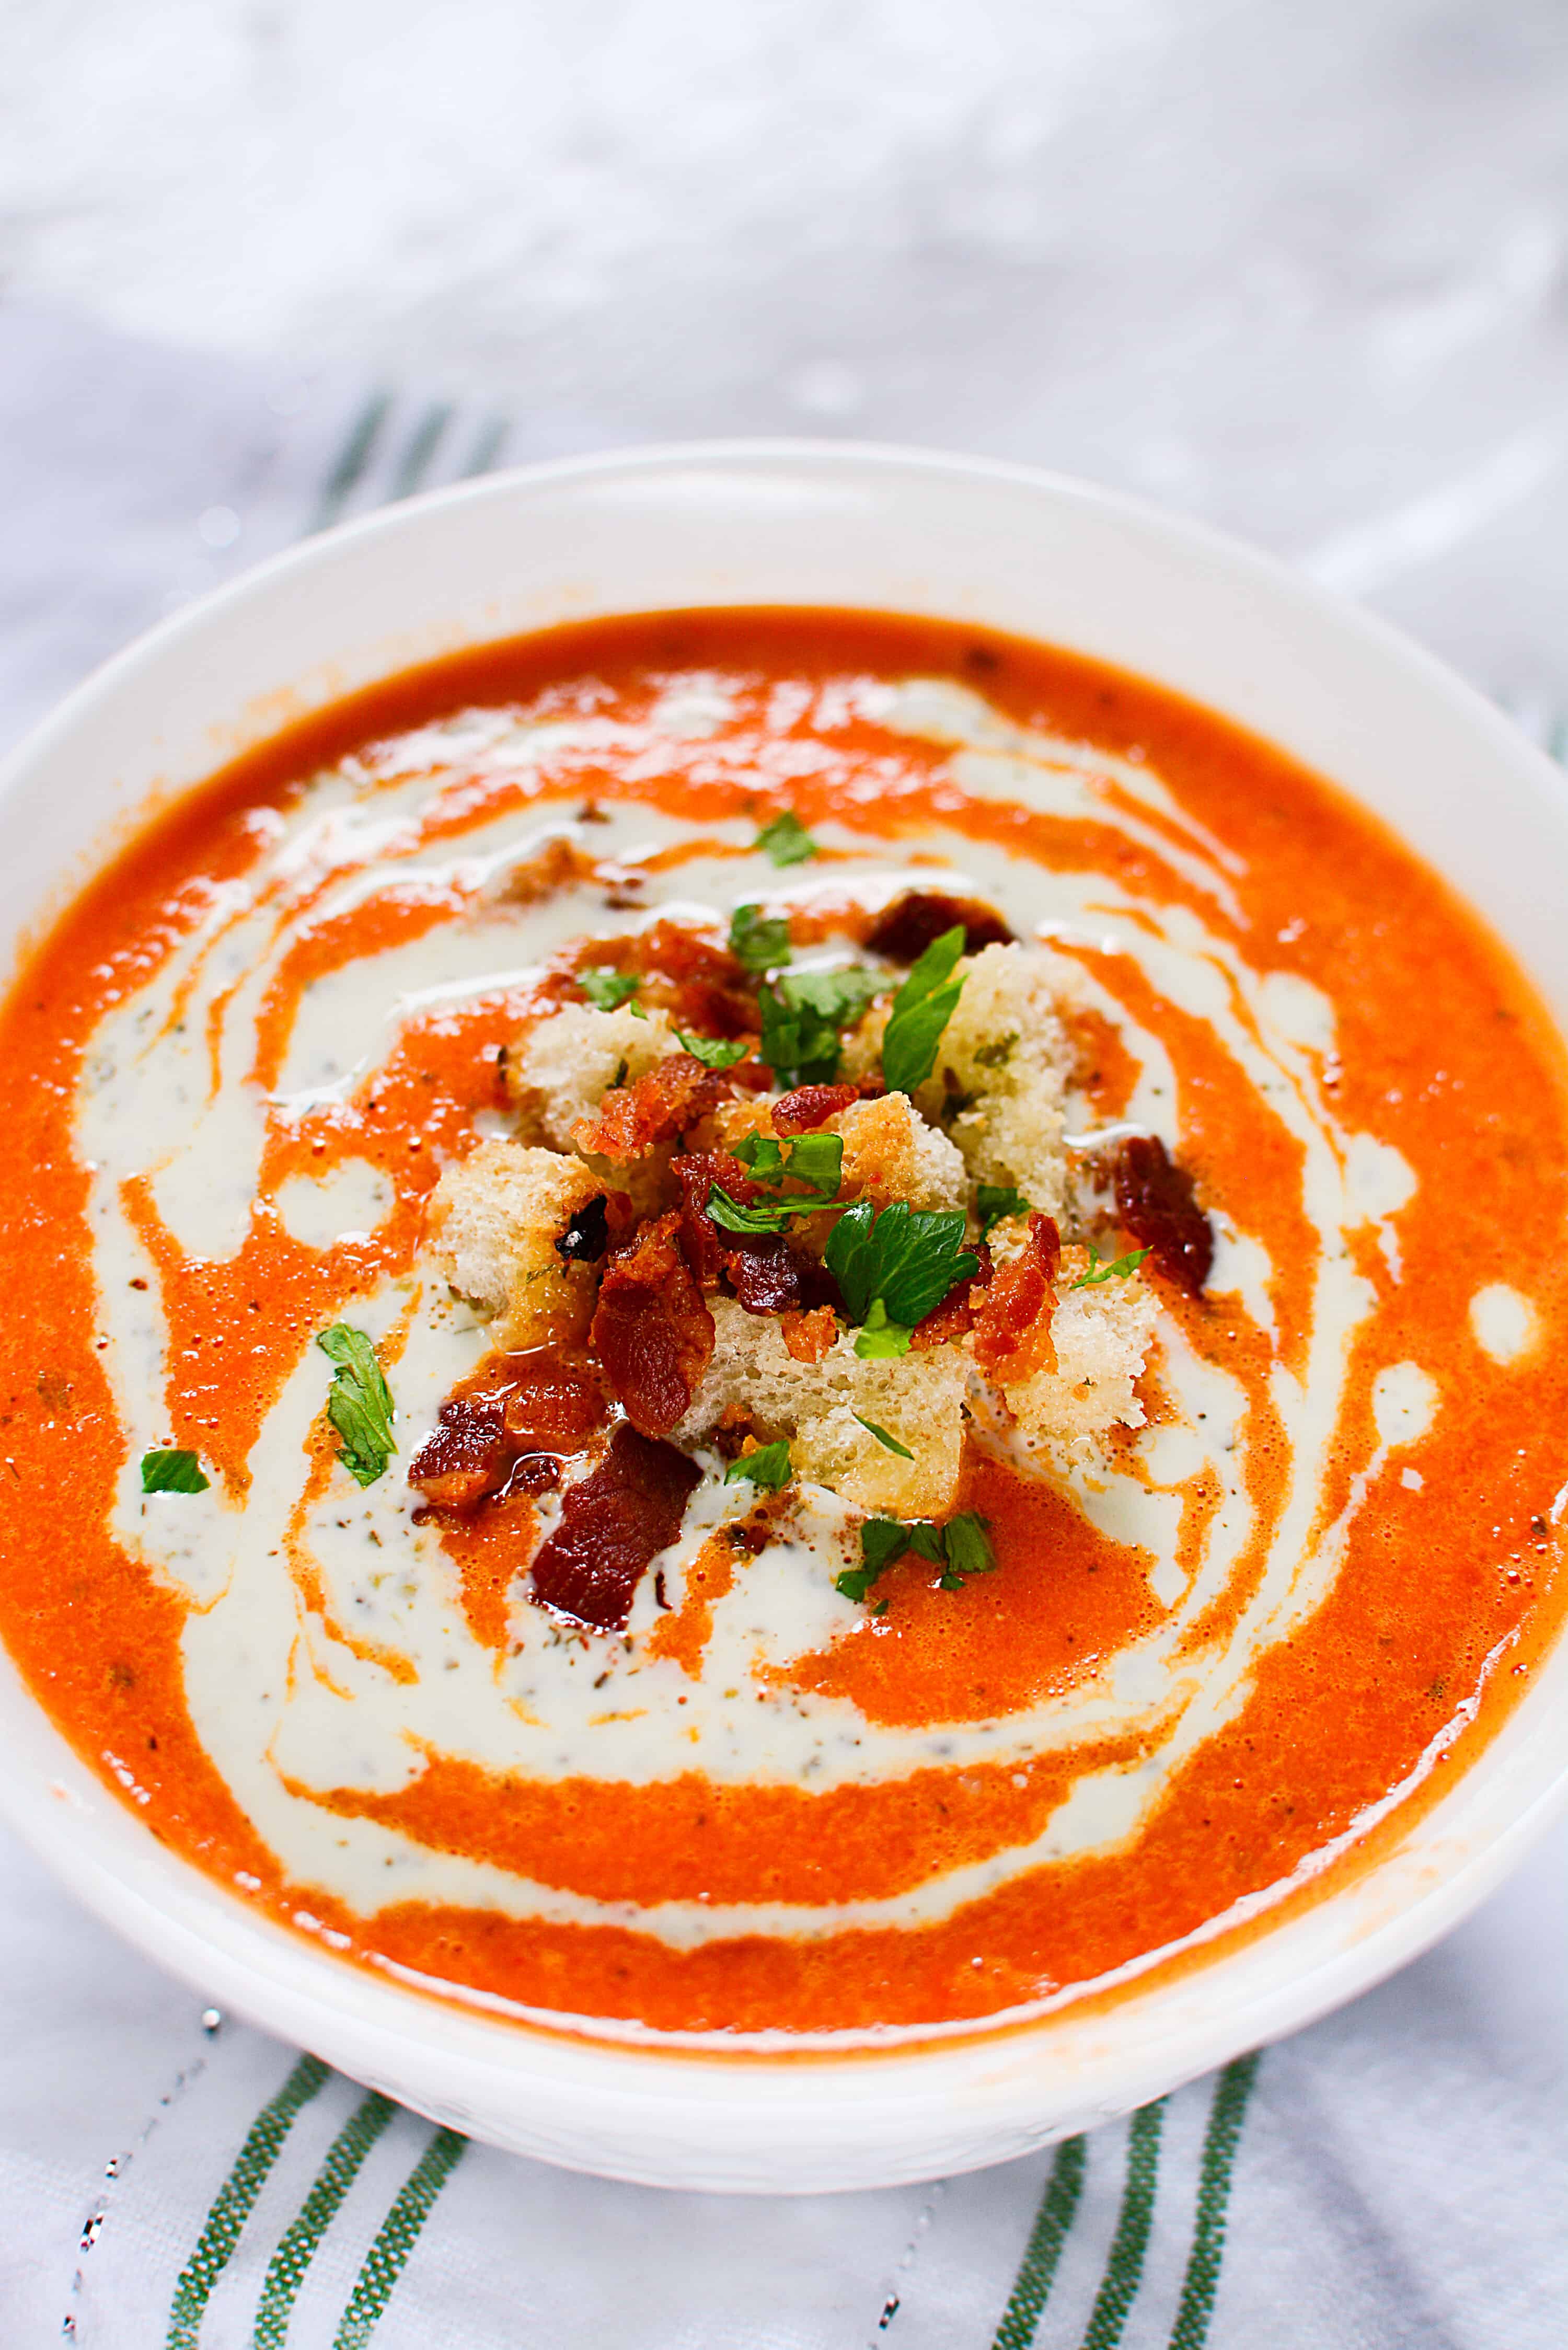 https://thesaltypot.com/wp-content/uploads/2019/07/creamy-tomato-basil-soup15.jpg